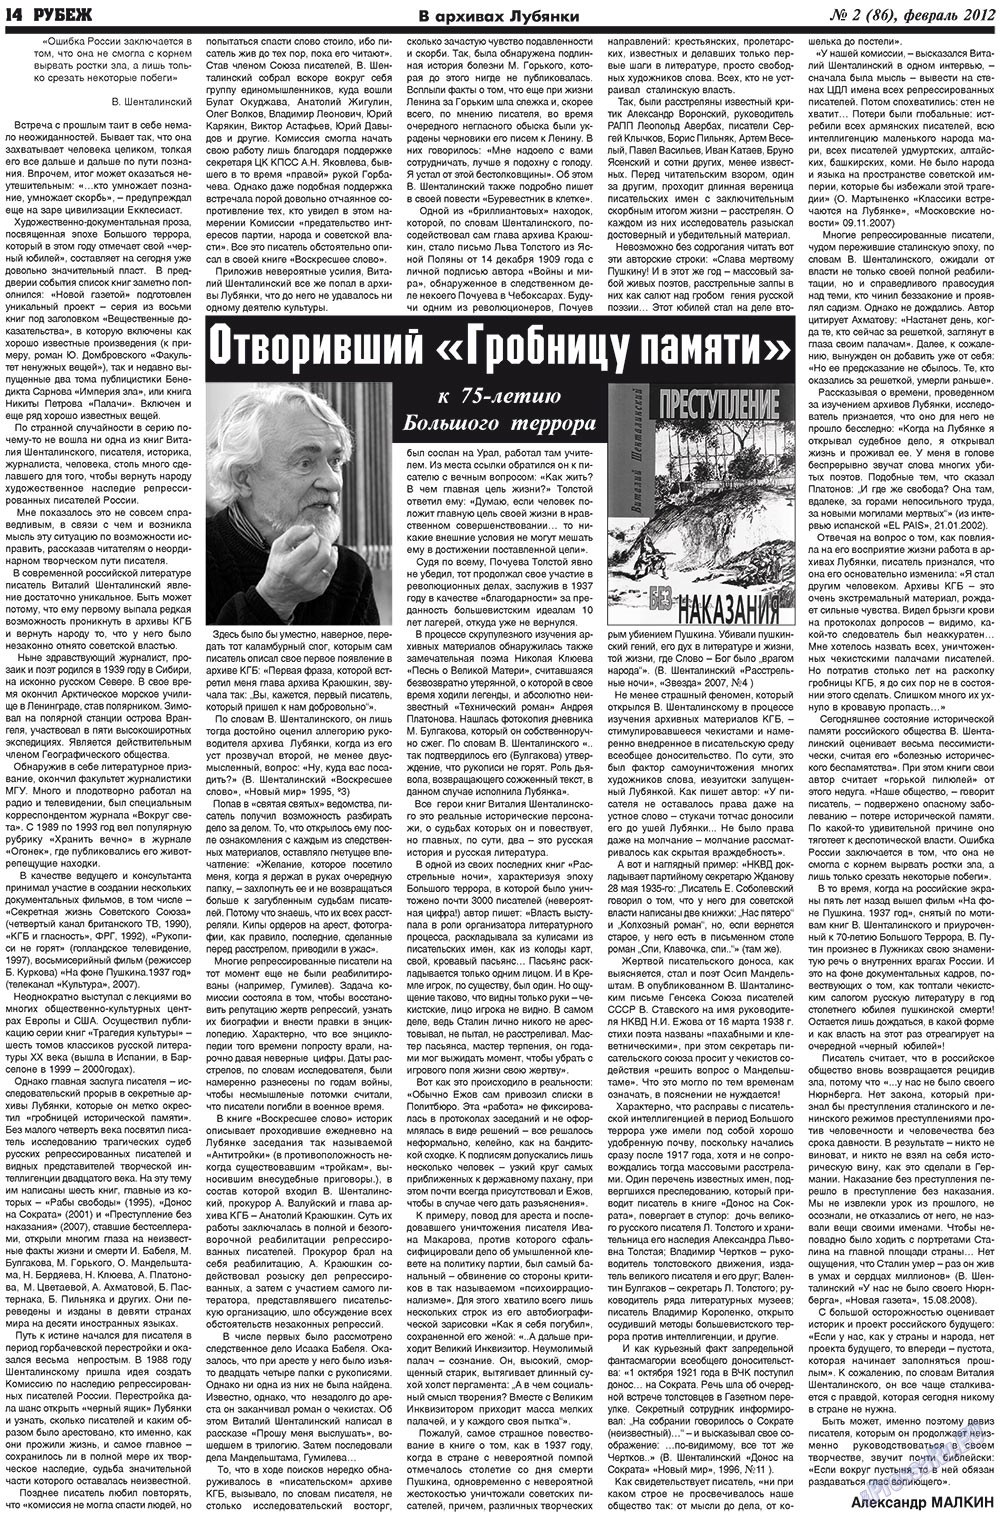 Рубеж, газета. 2012 №2 стр.14